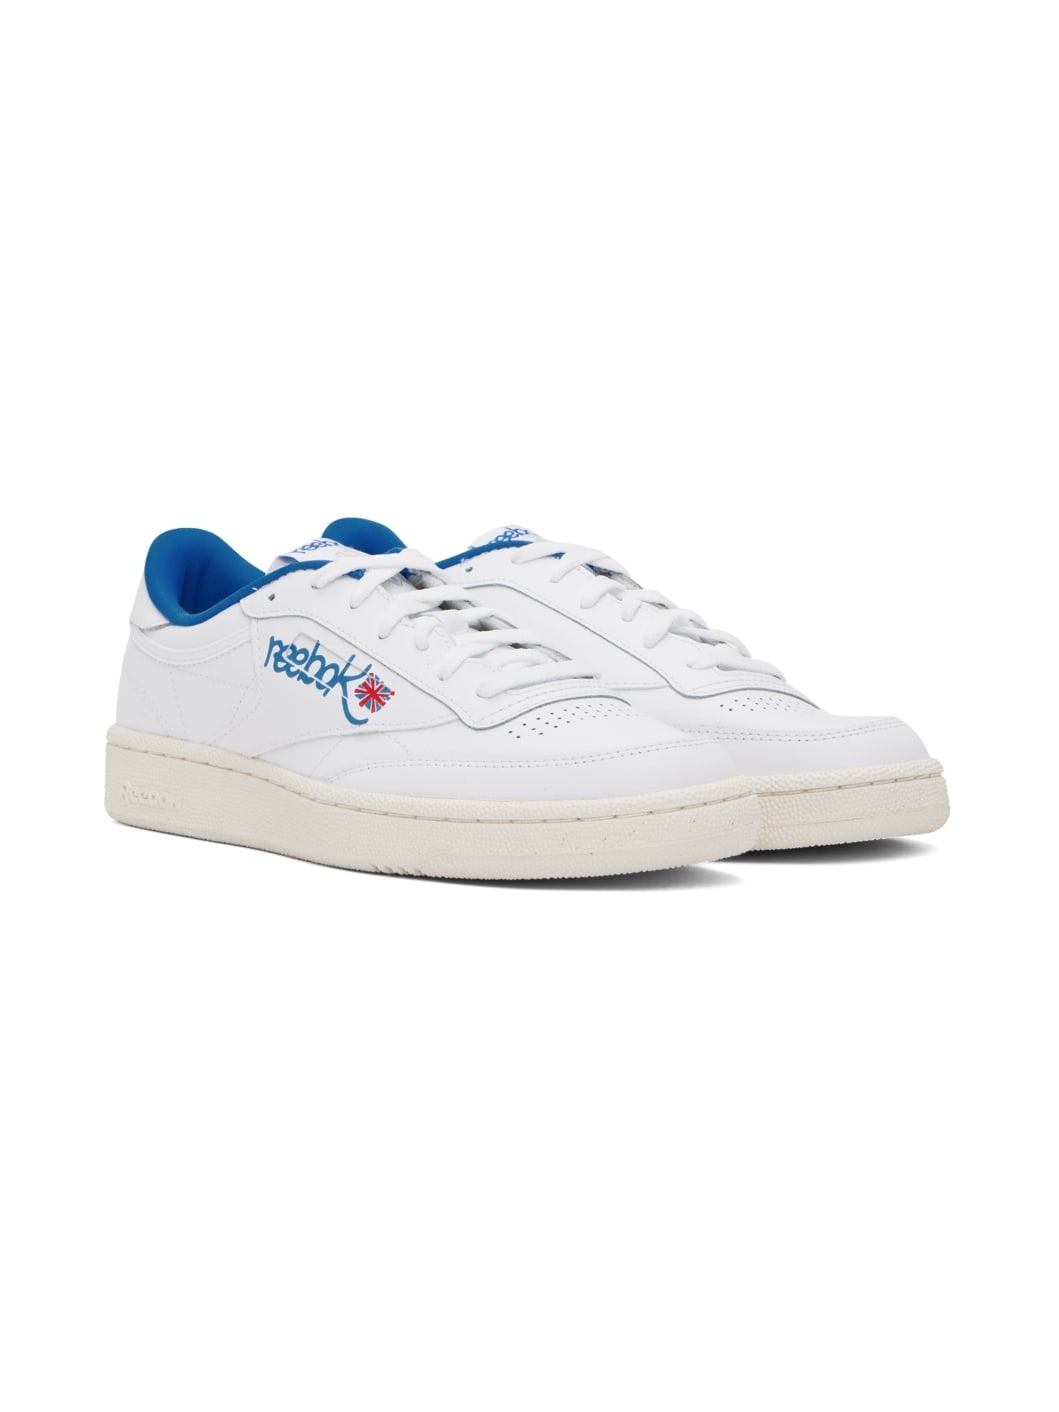 White & Blue Club C 85 Sneakers - 4